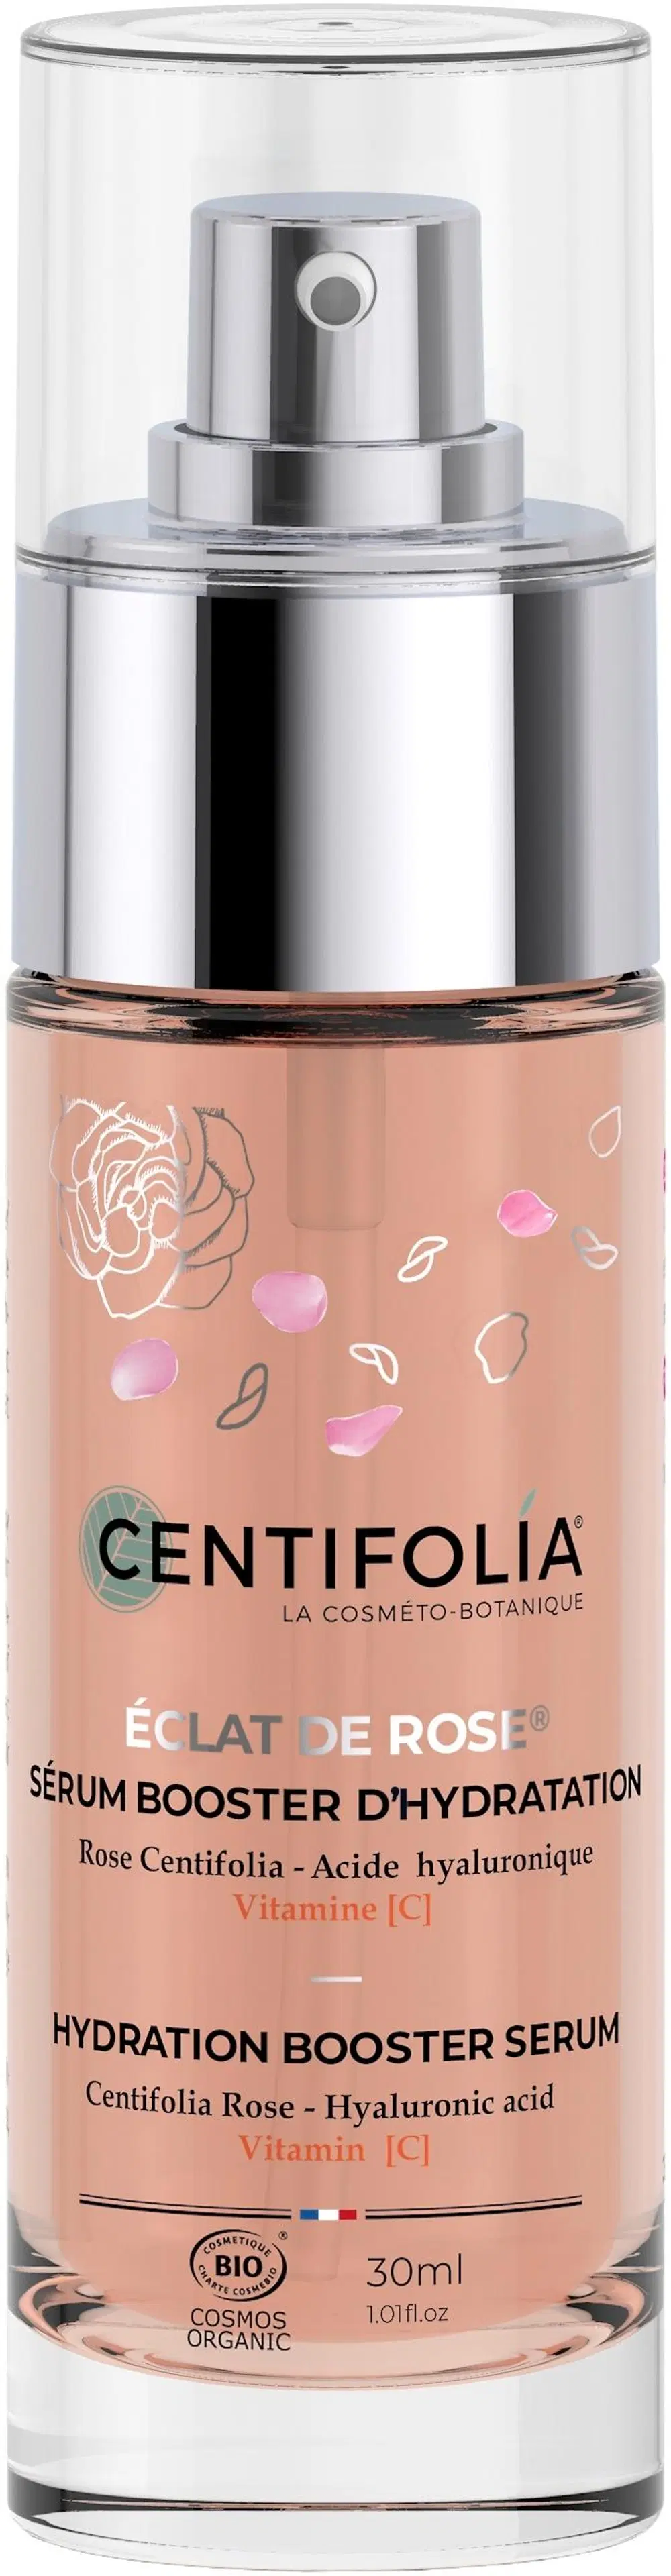 Centifolia Eclat de Rose Hydration Booster Serum seerumi 30 ml